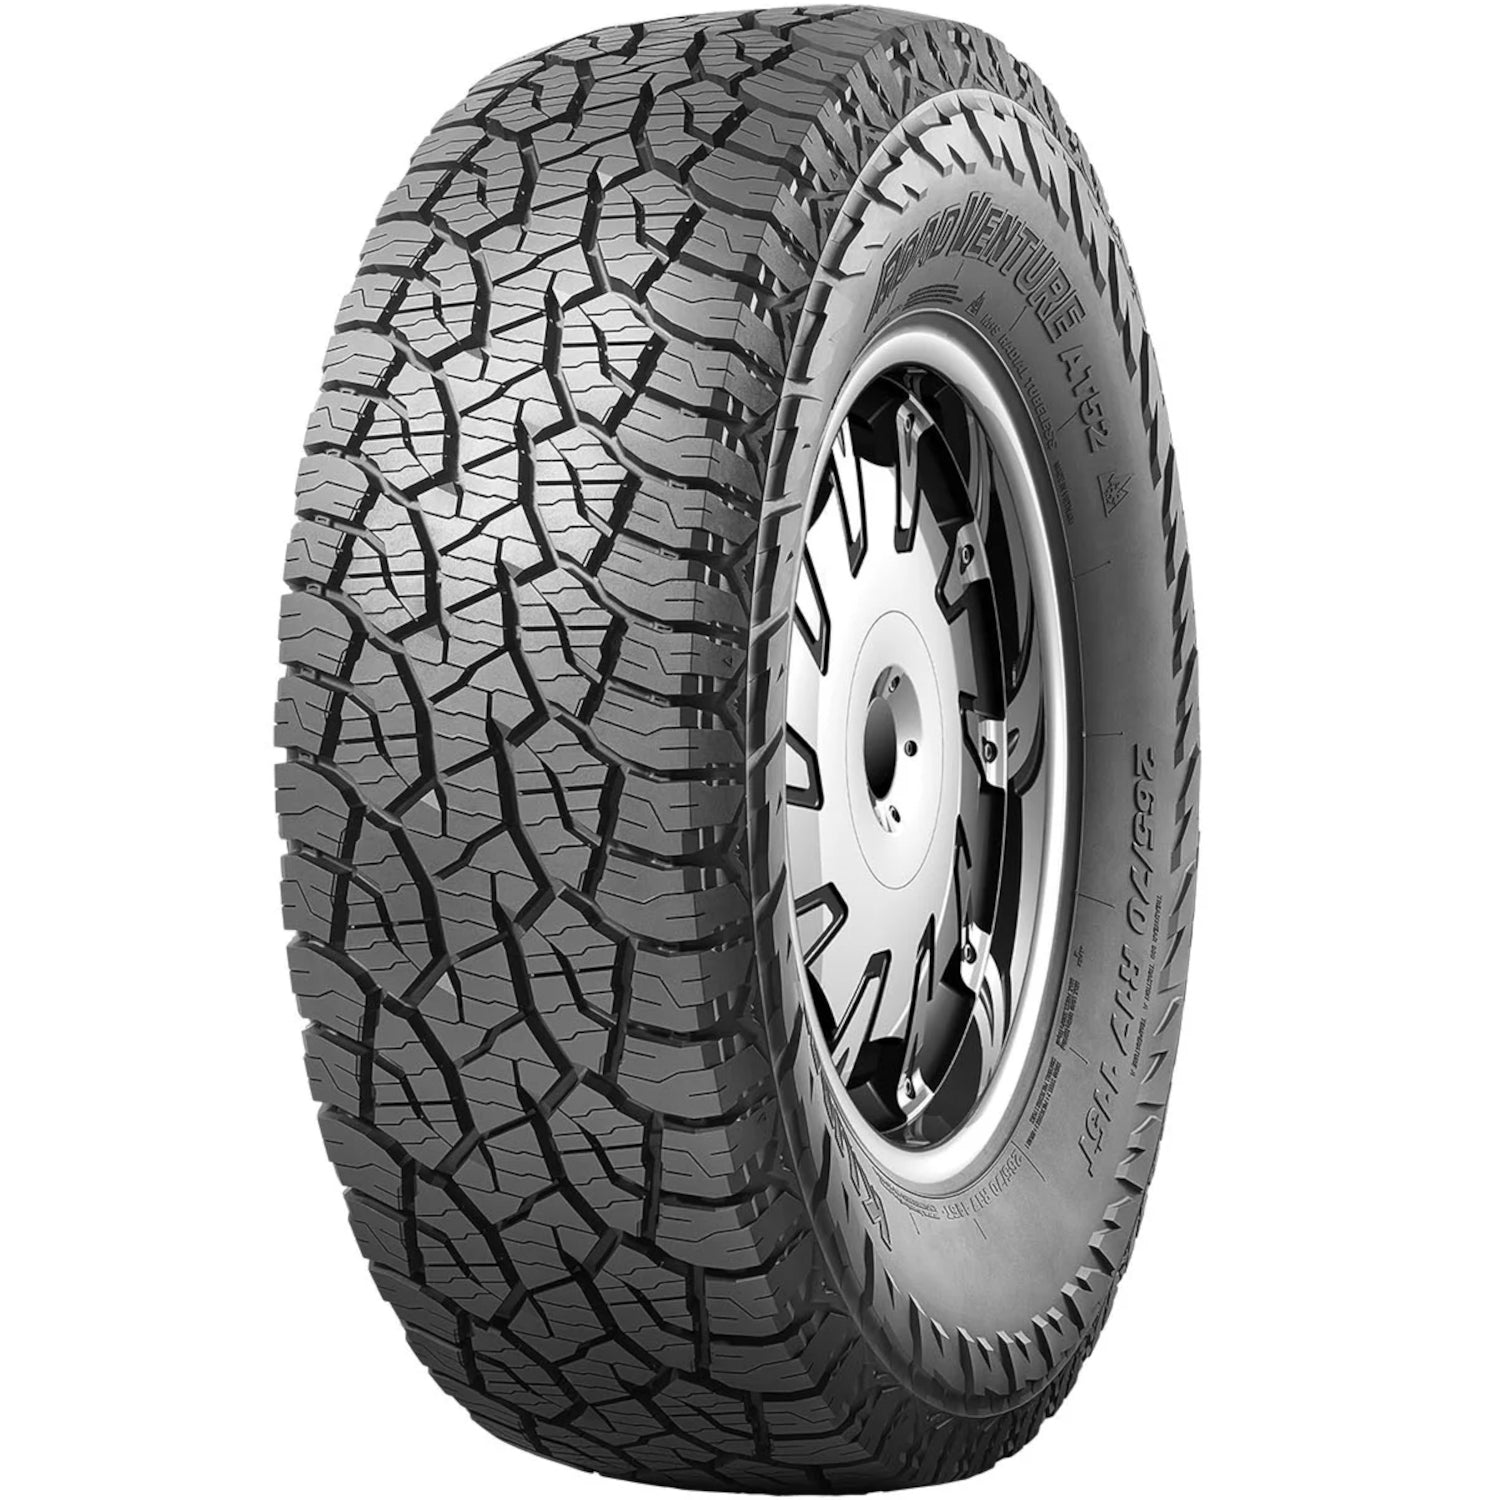 KUMHO ROAD VENTURE AT52 235/70R16 (29X9.3R 16) Tires